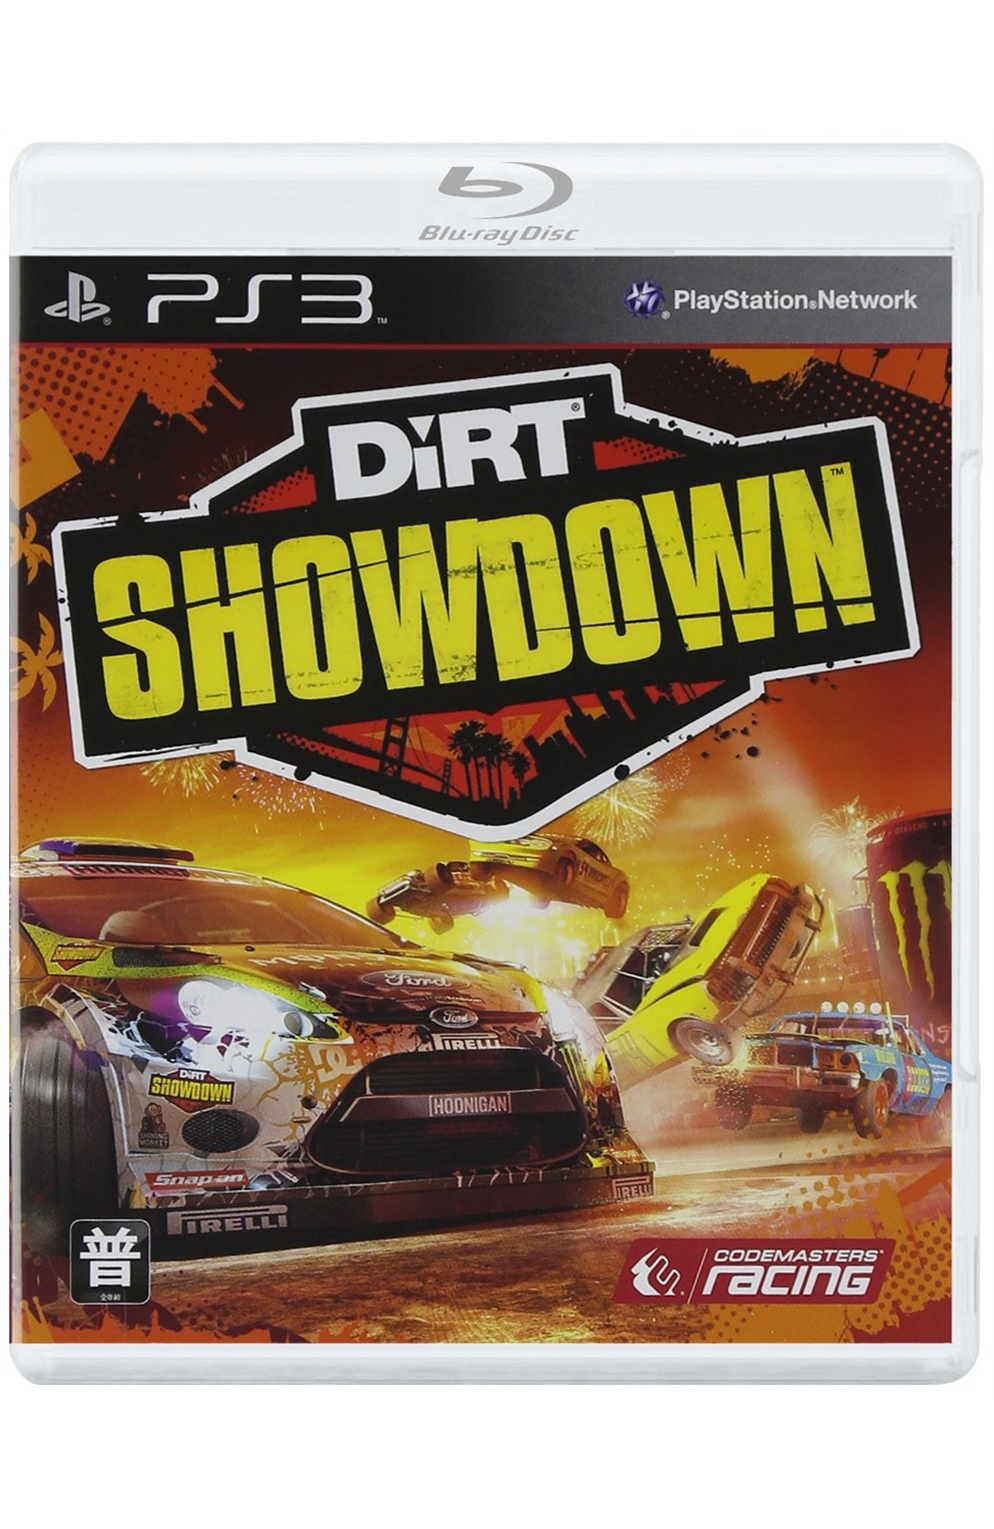 Playstation 3 Ps3 Dirt Showdown